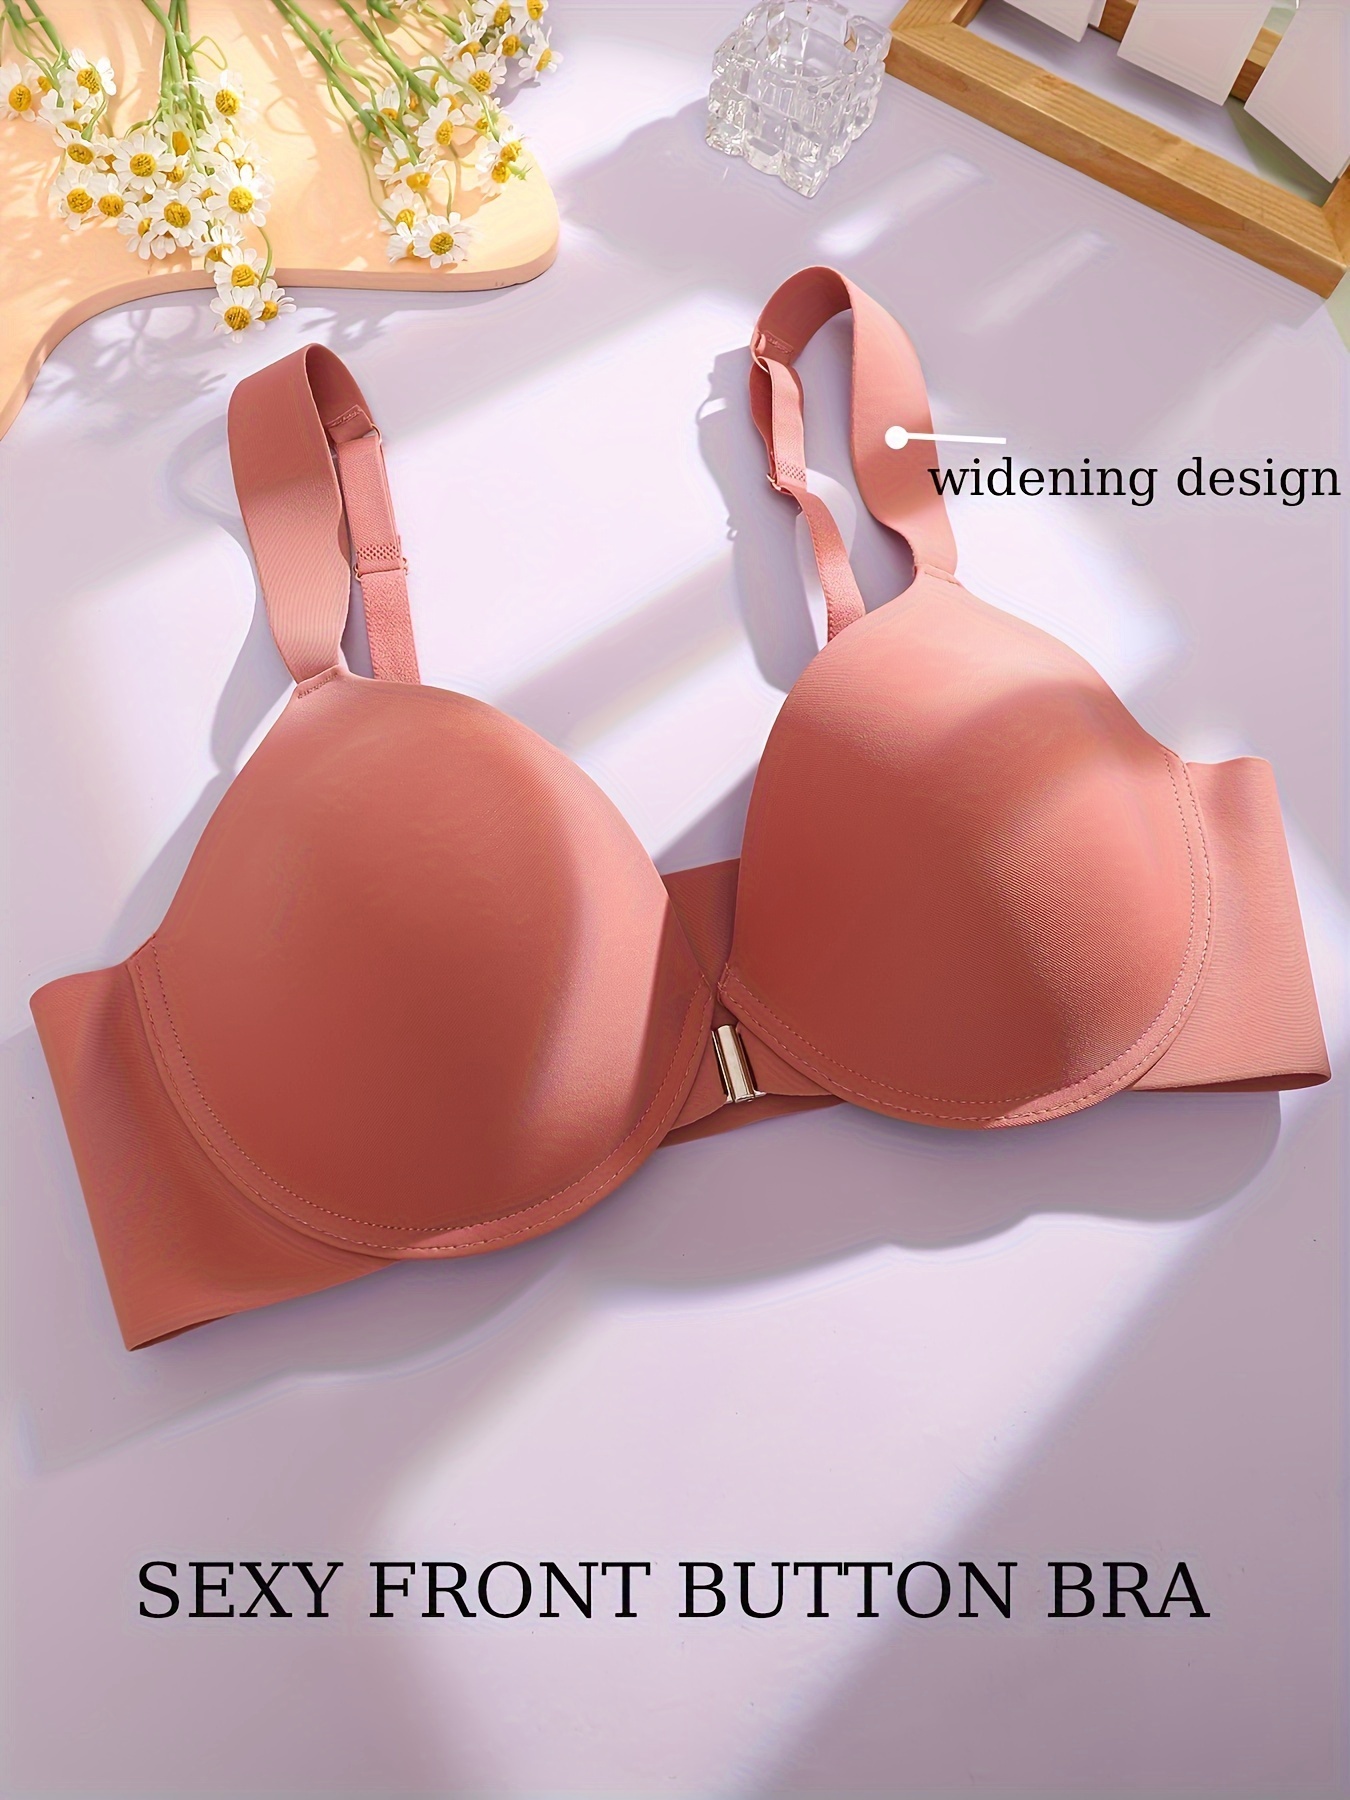 Sexy Front Closure Plus Size Bras Lingerie Underwear For Women